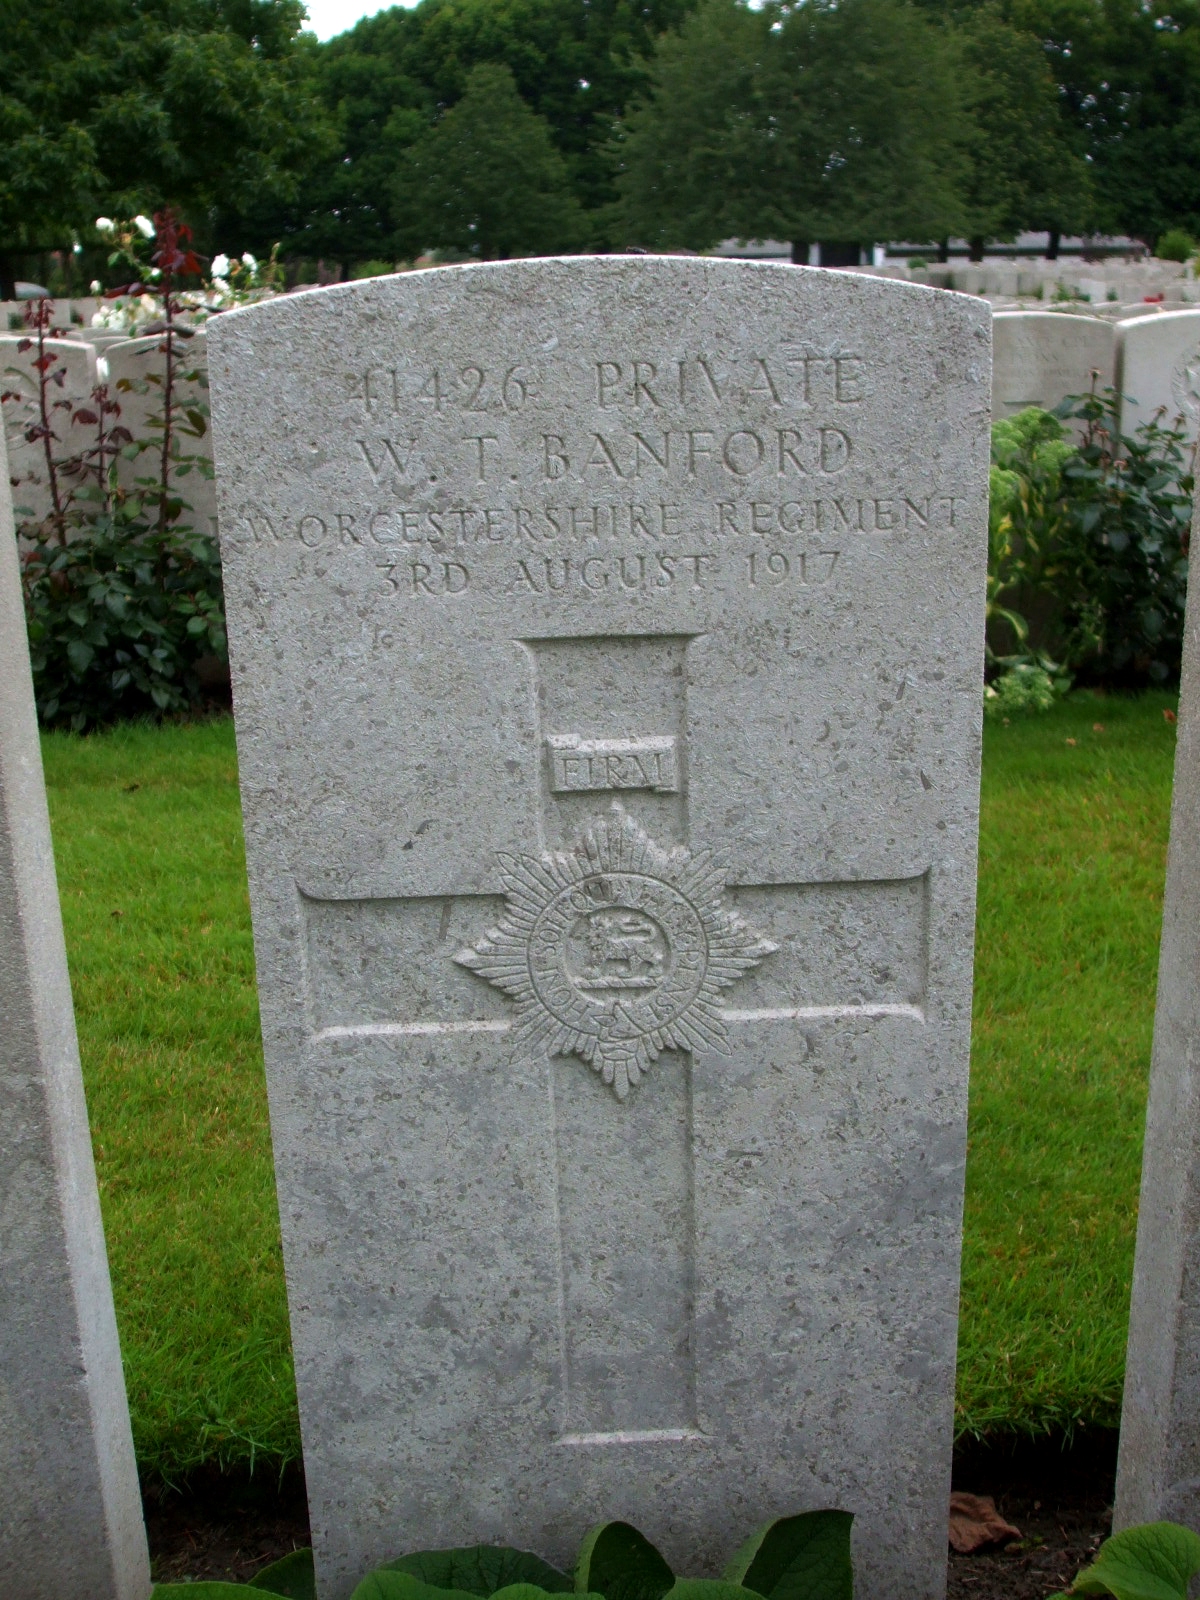 William Banford's grave at Lijssenthoek Military Cemetery.